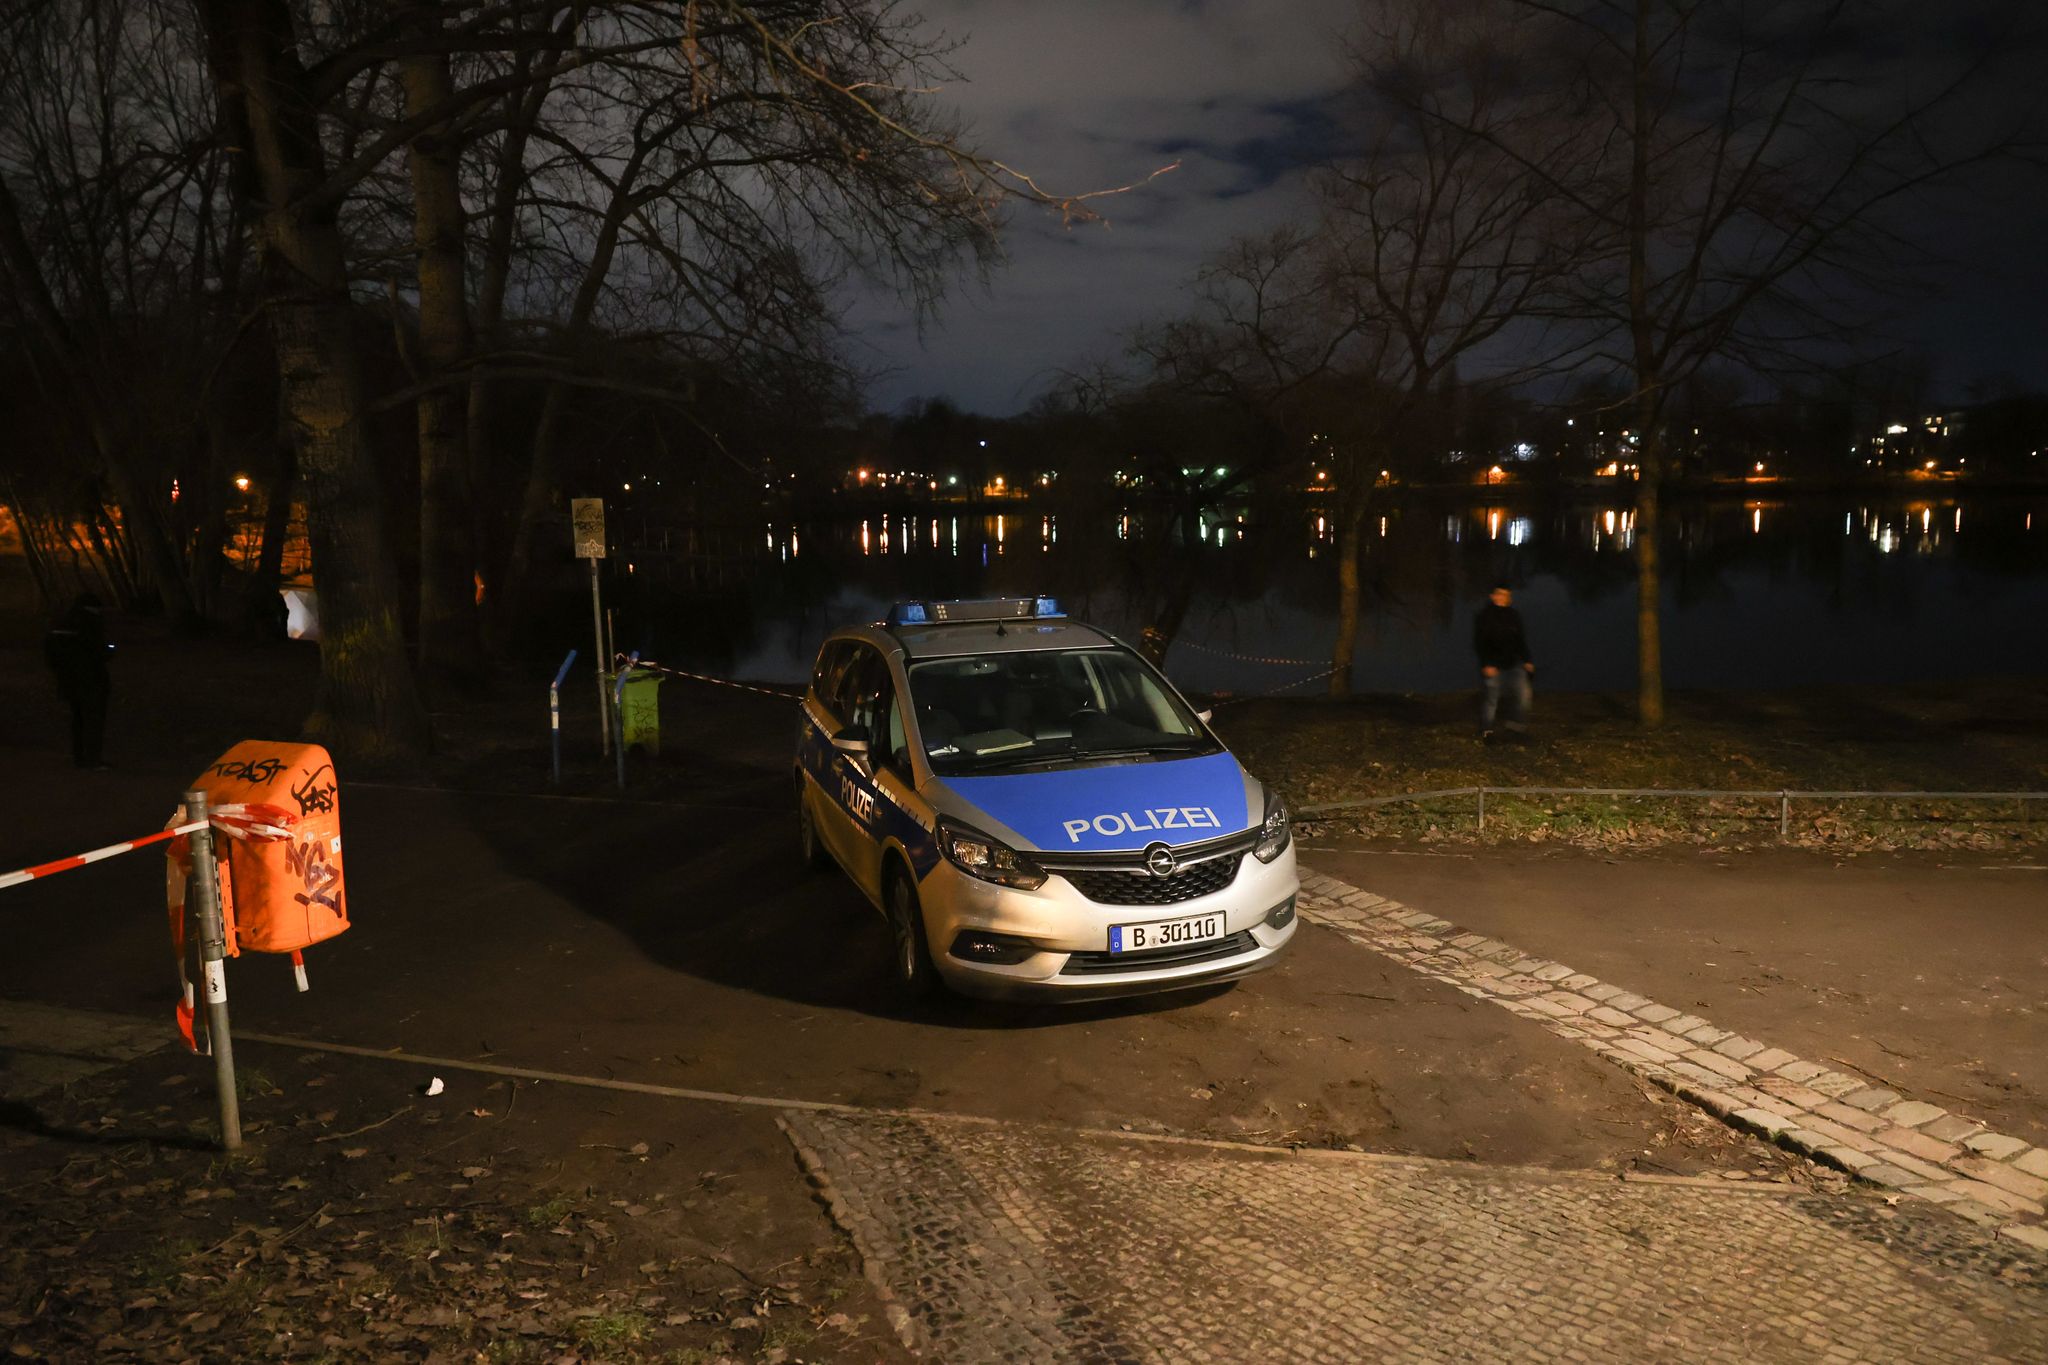 Frau und Kind tot in Berliner See gefunden